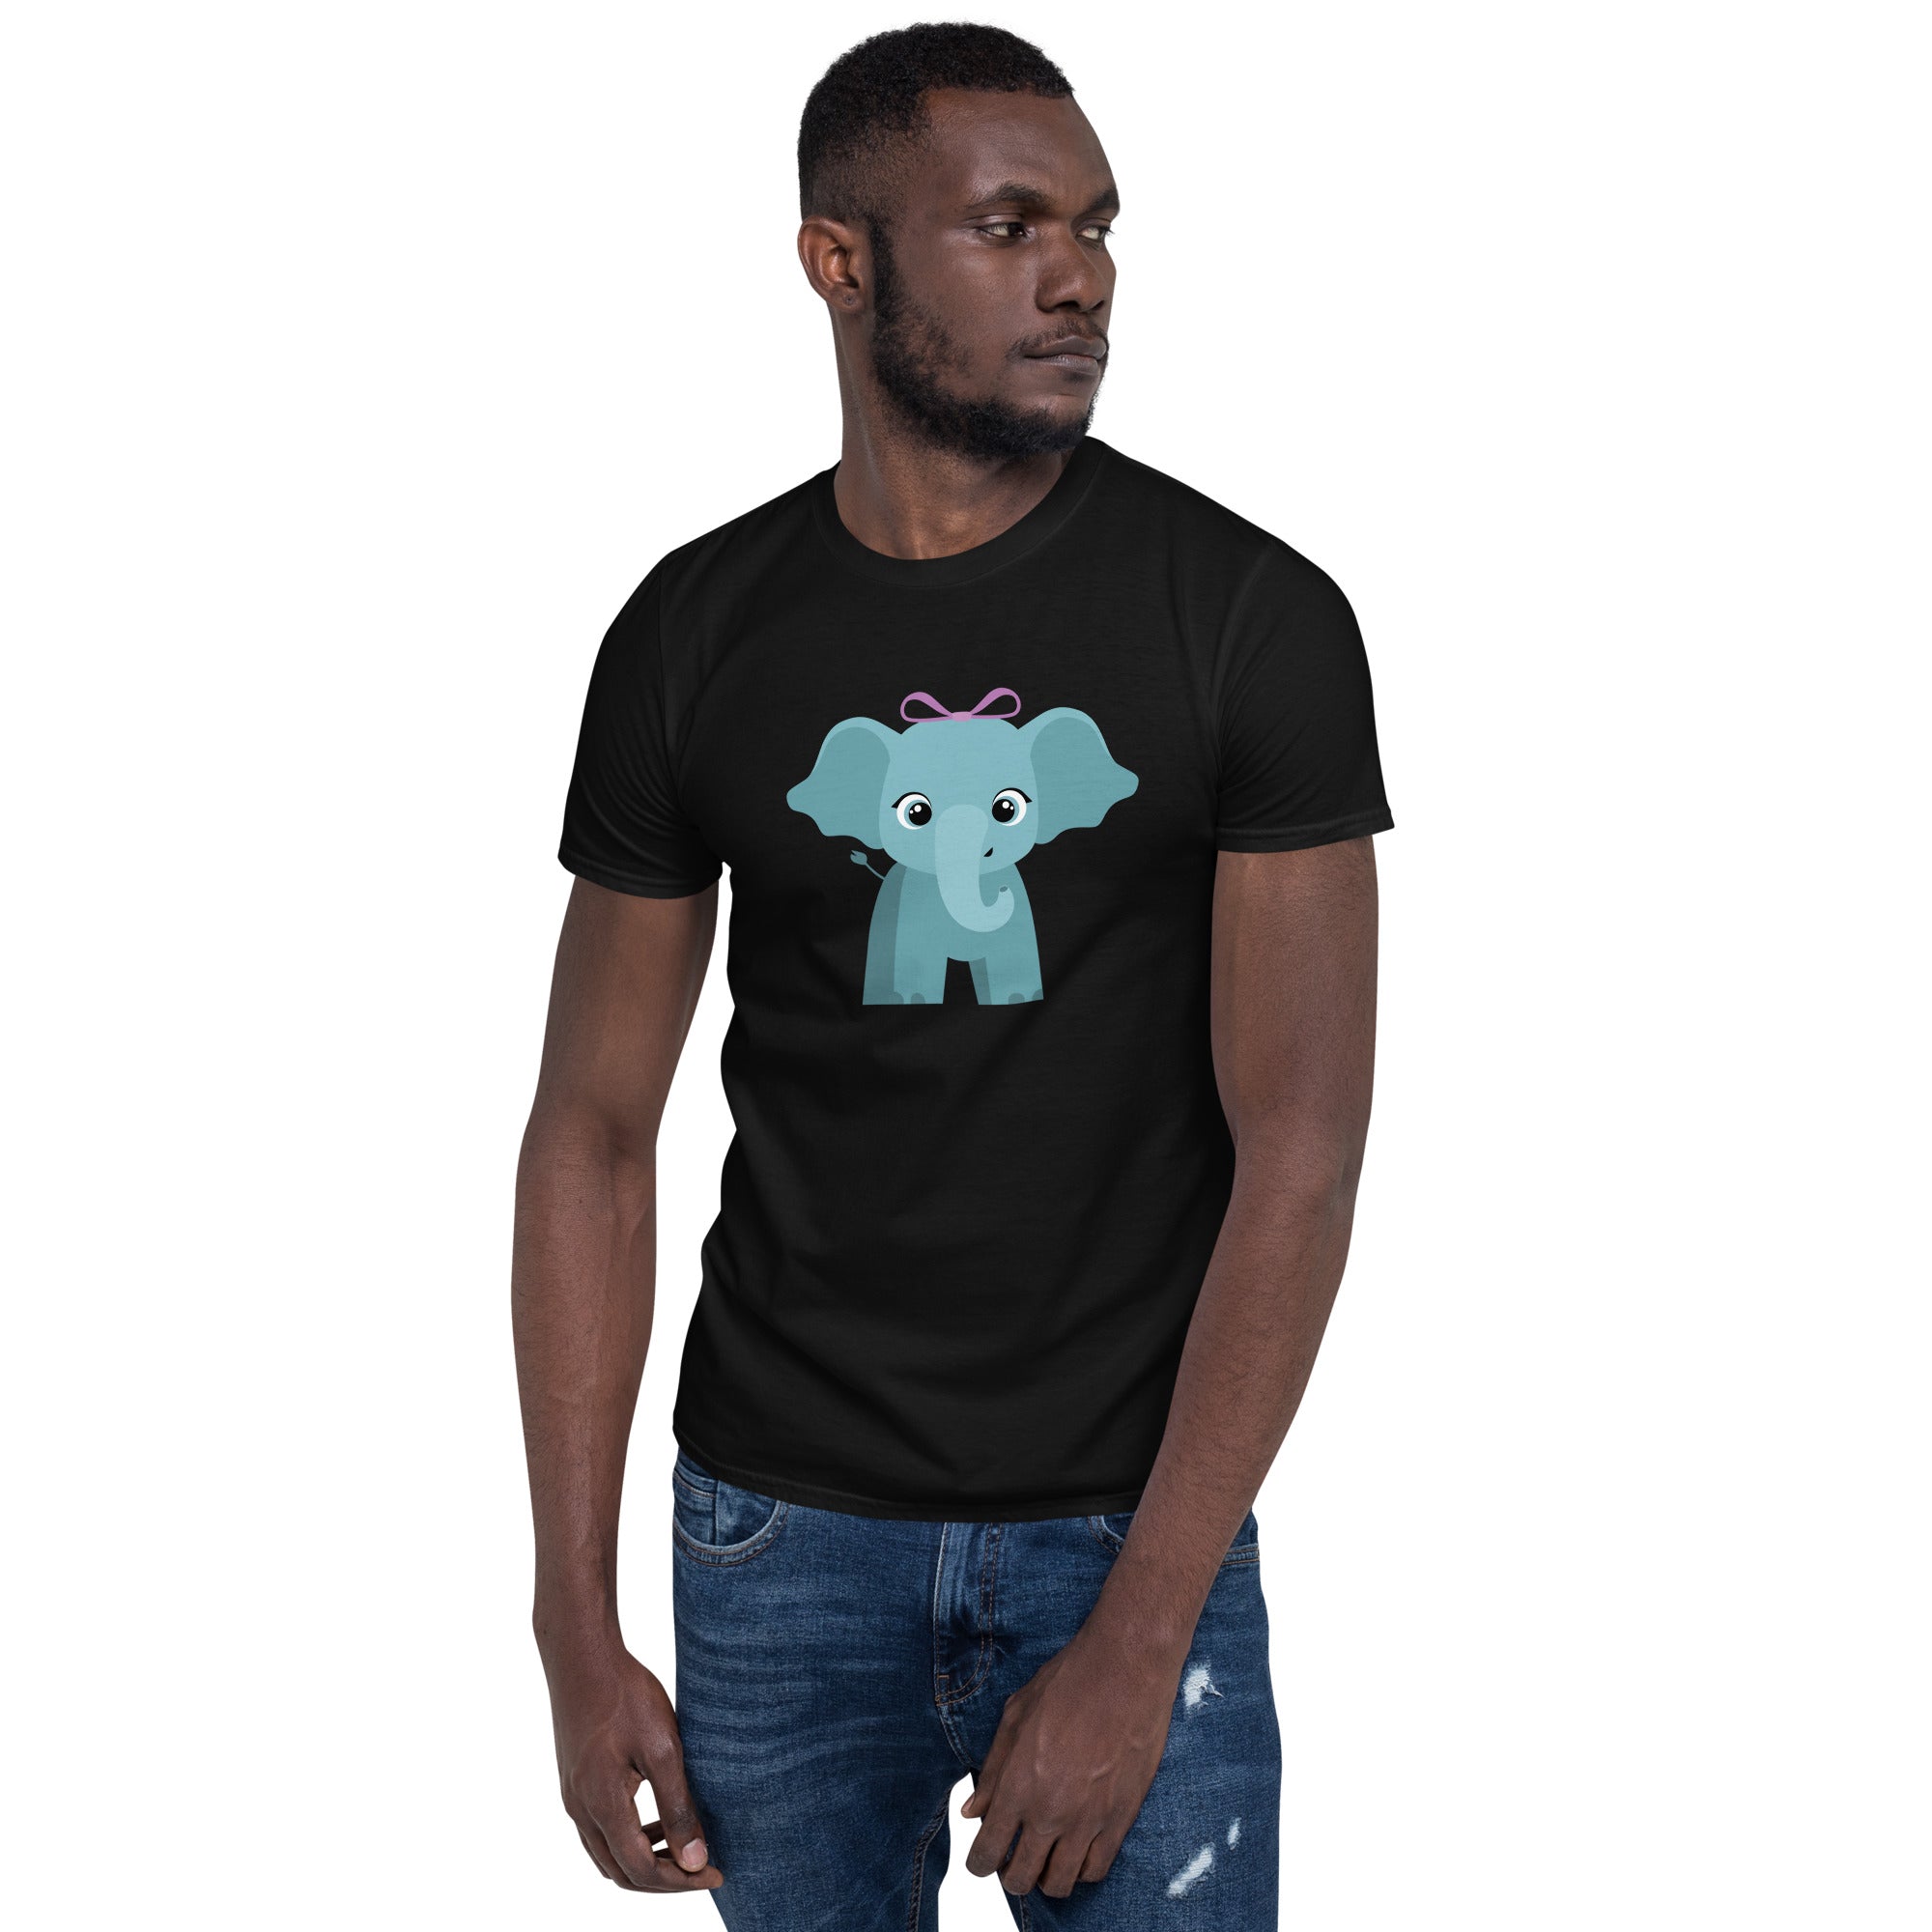 Cute Baby Elephant - Short-Sleeve Unisex T-Shirt